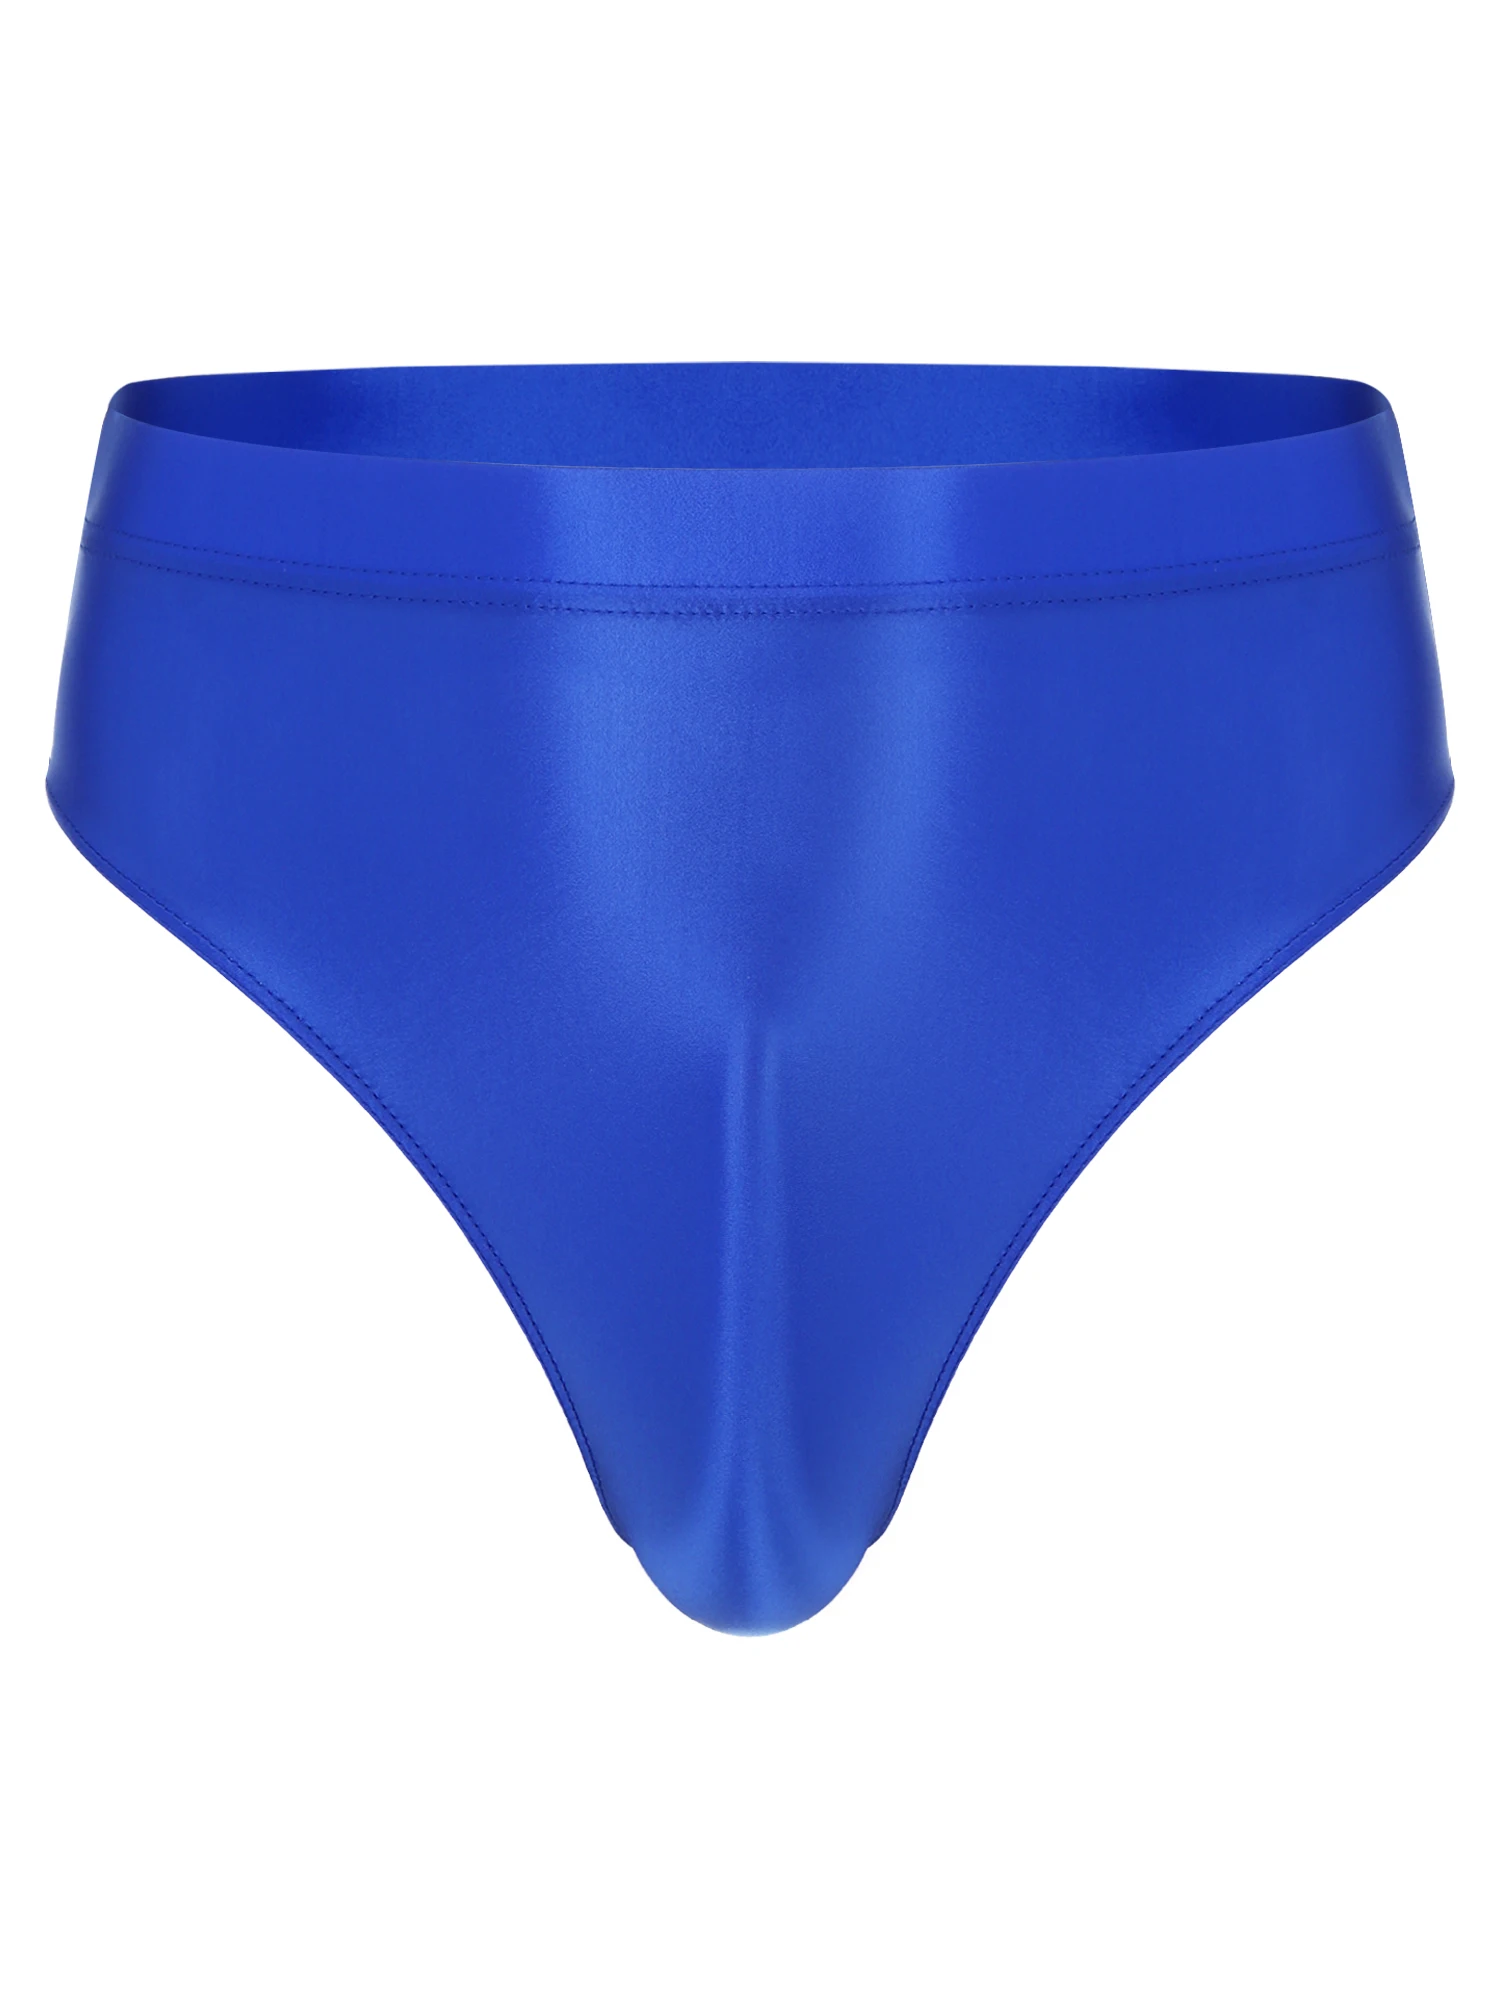 

Swimwear Mens Swimsuit Glossy Underwear High Waist Thongs Panties Solid Color Briefs Elastic Waistband Underpants